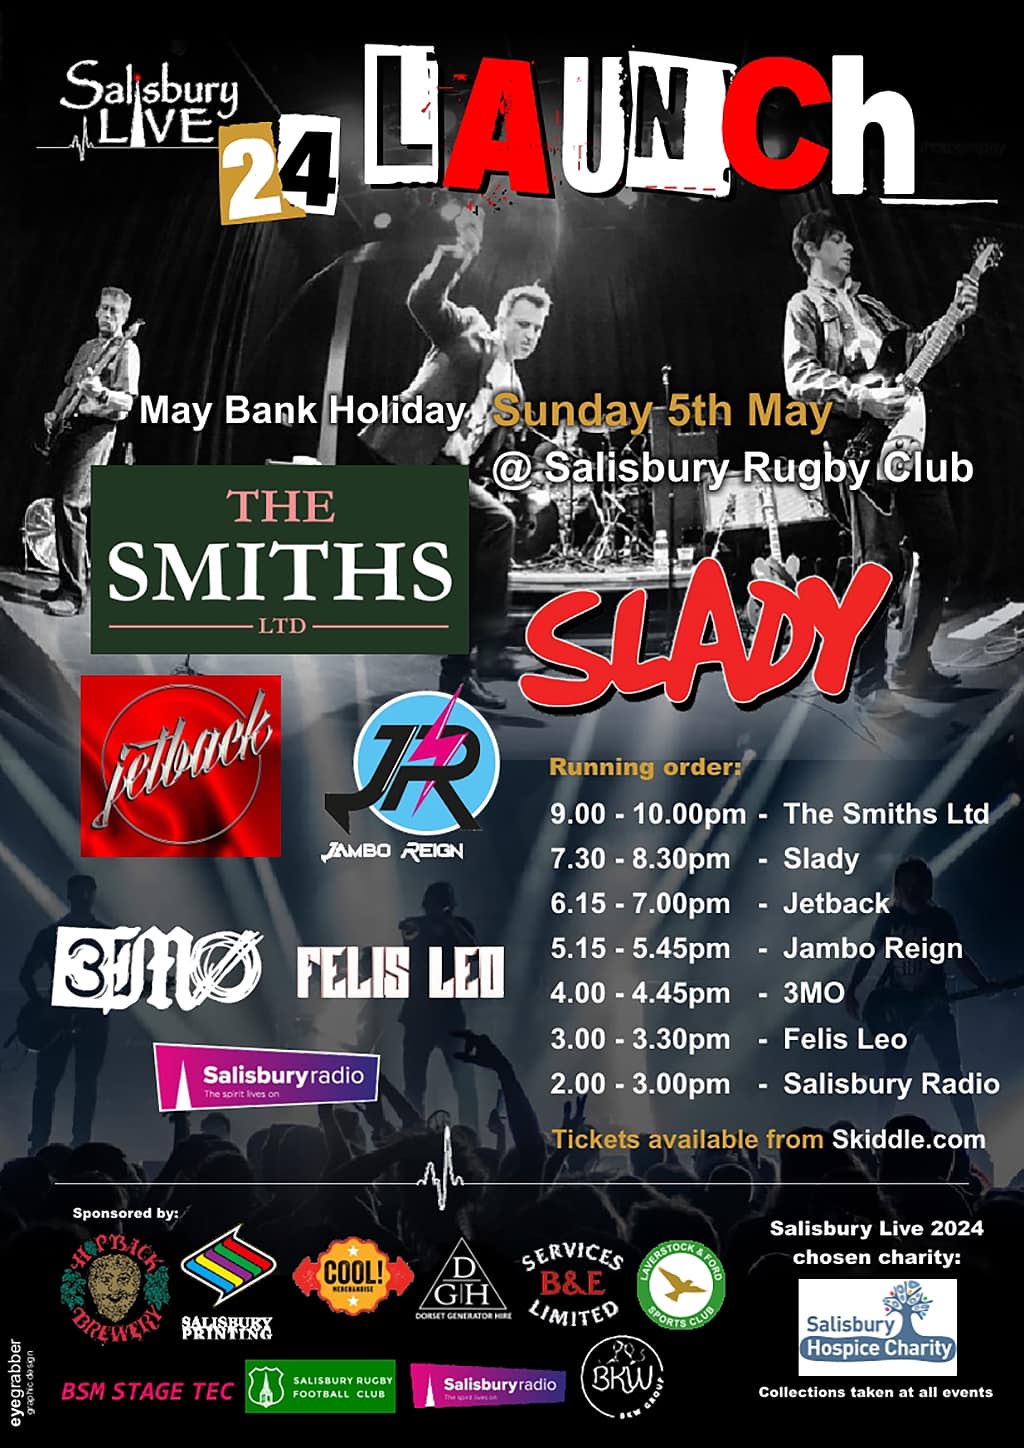 Salisbury Live Launch Event: The Smiths Ltd + Slady + Jetback + Jambo Reign + 3MO + Felis Leo + Salisbury Radio